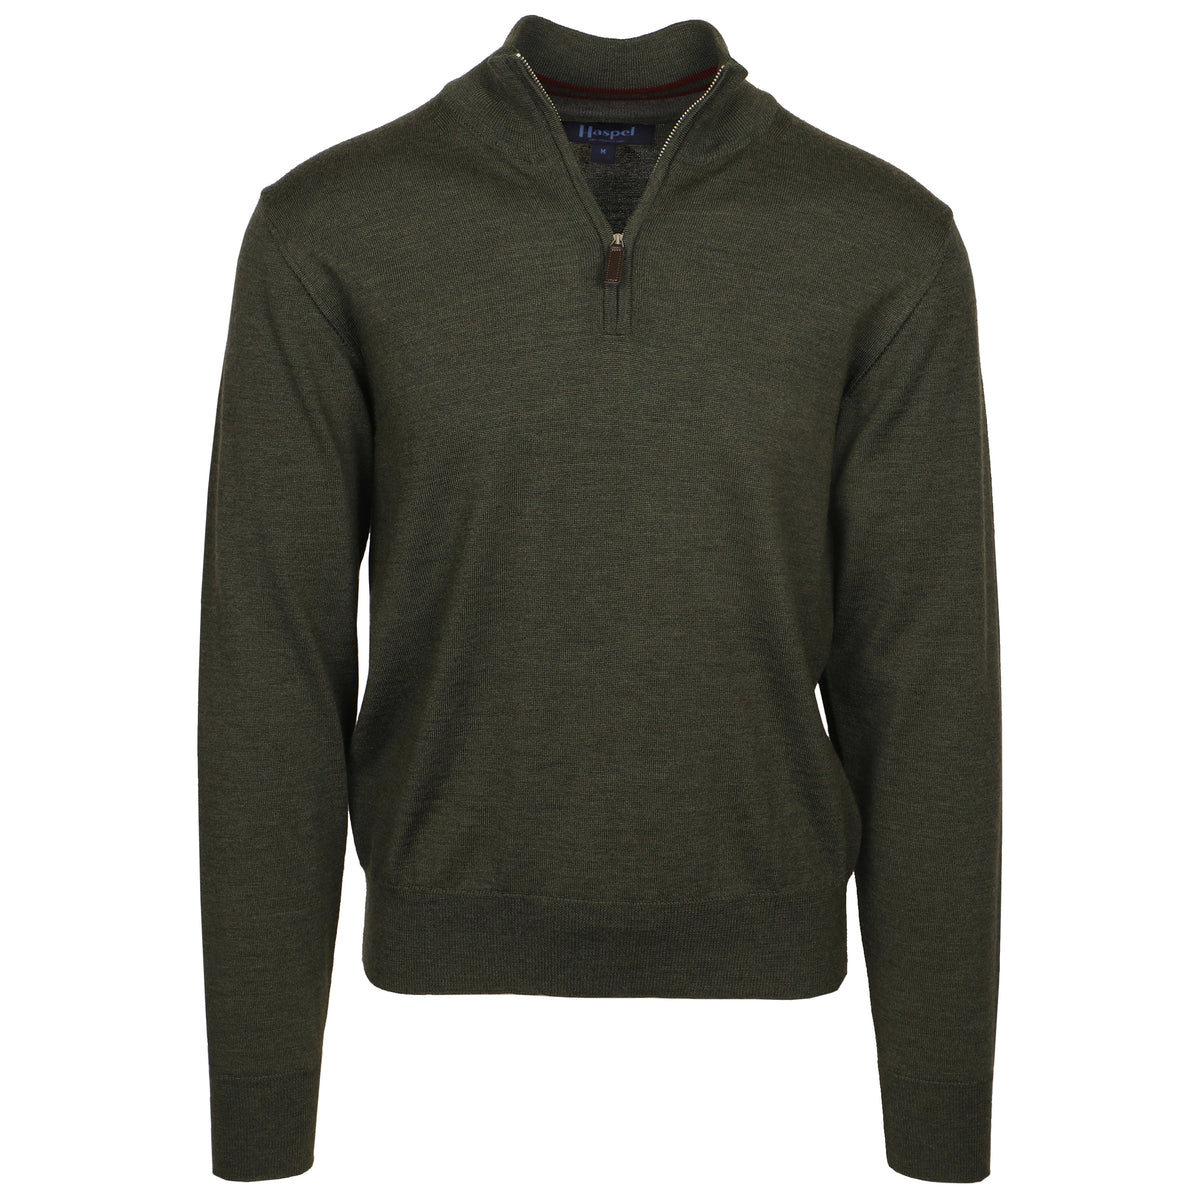 Lafayette Green Quarter Zip Sweater